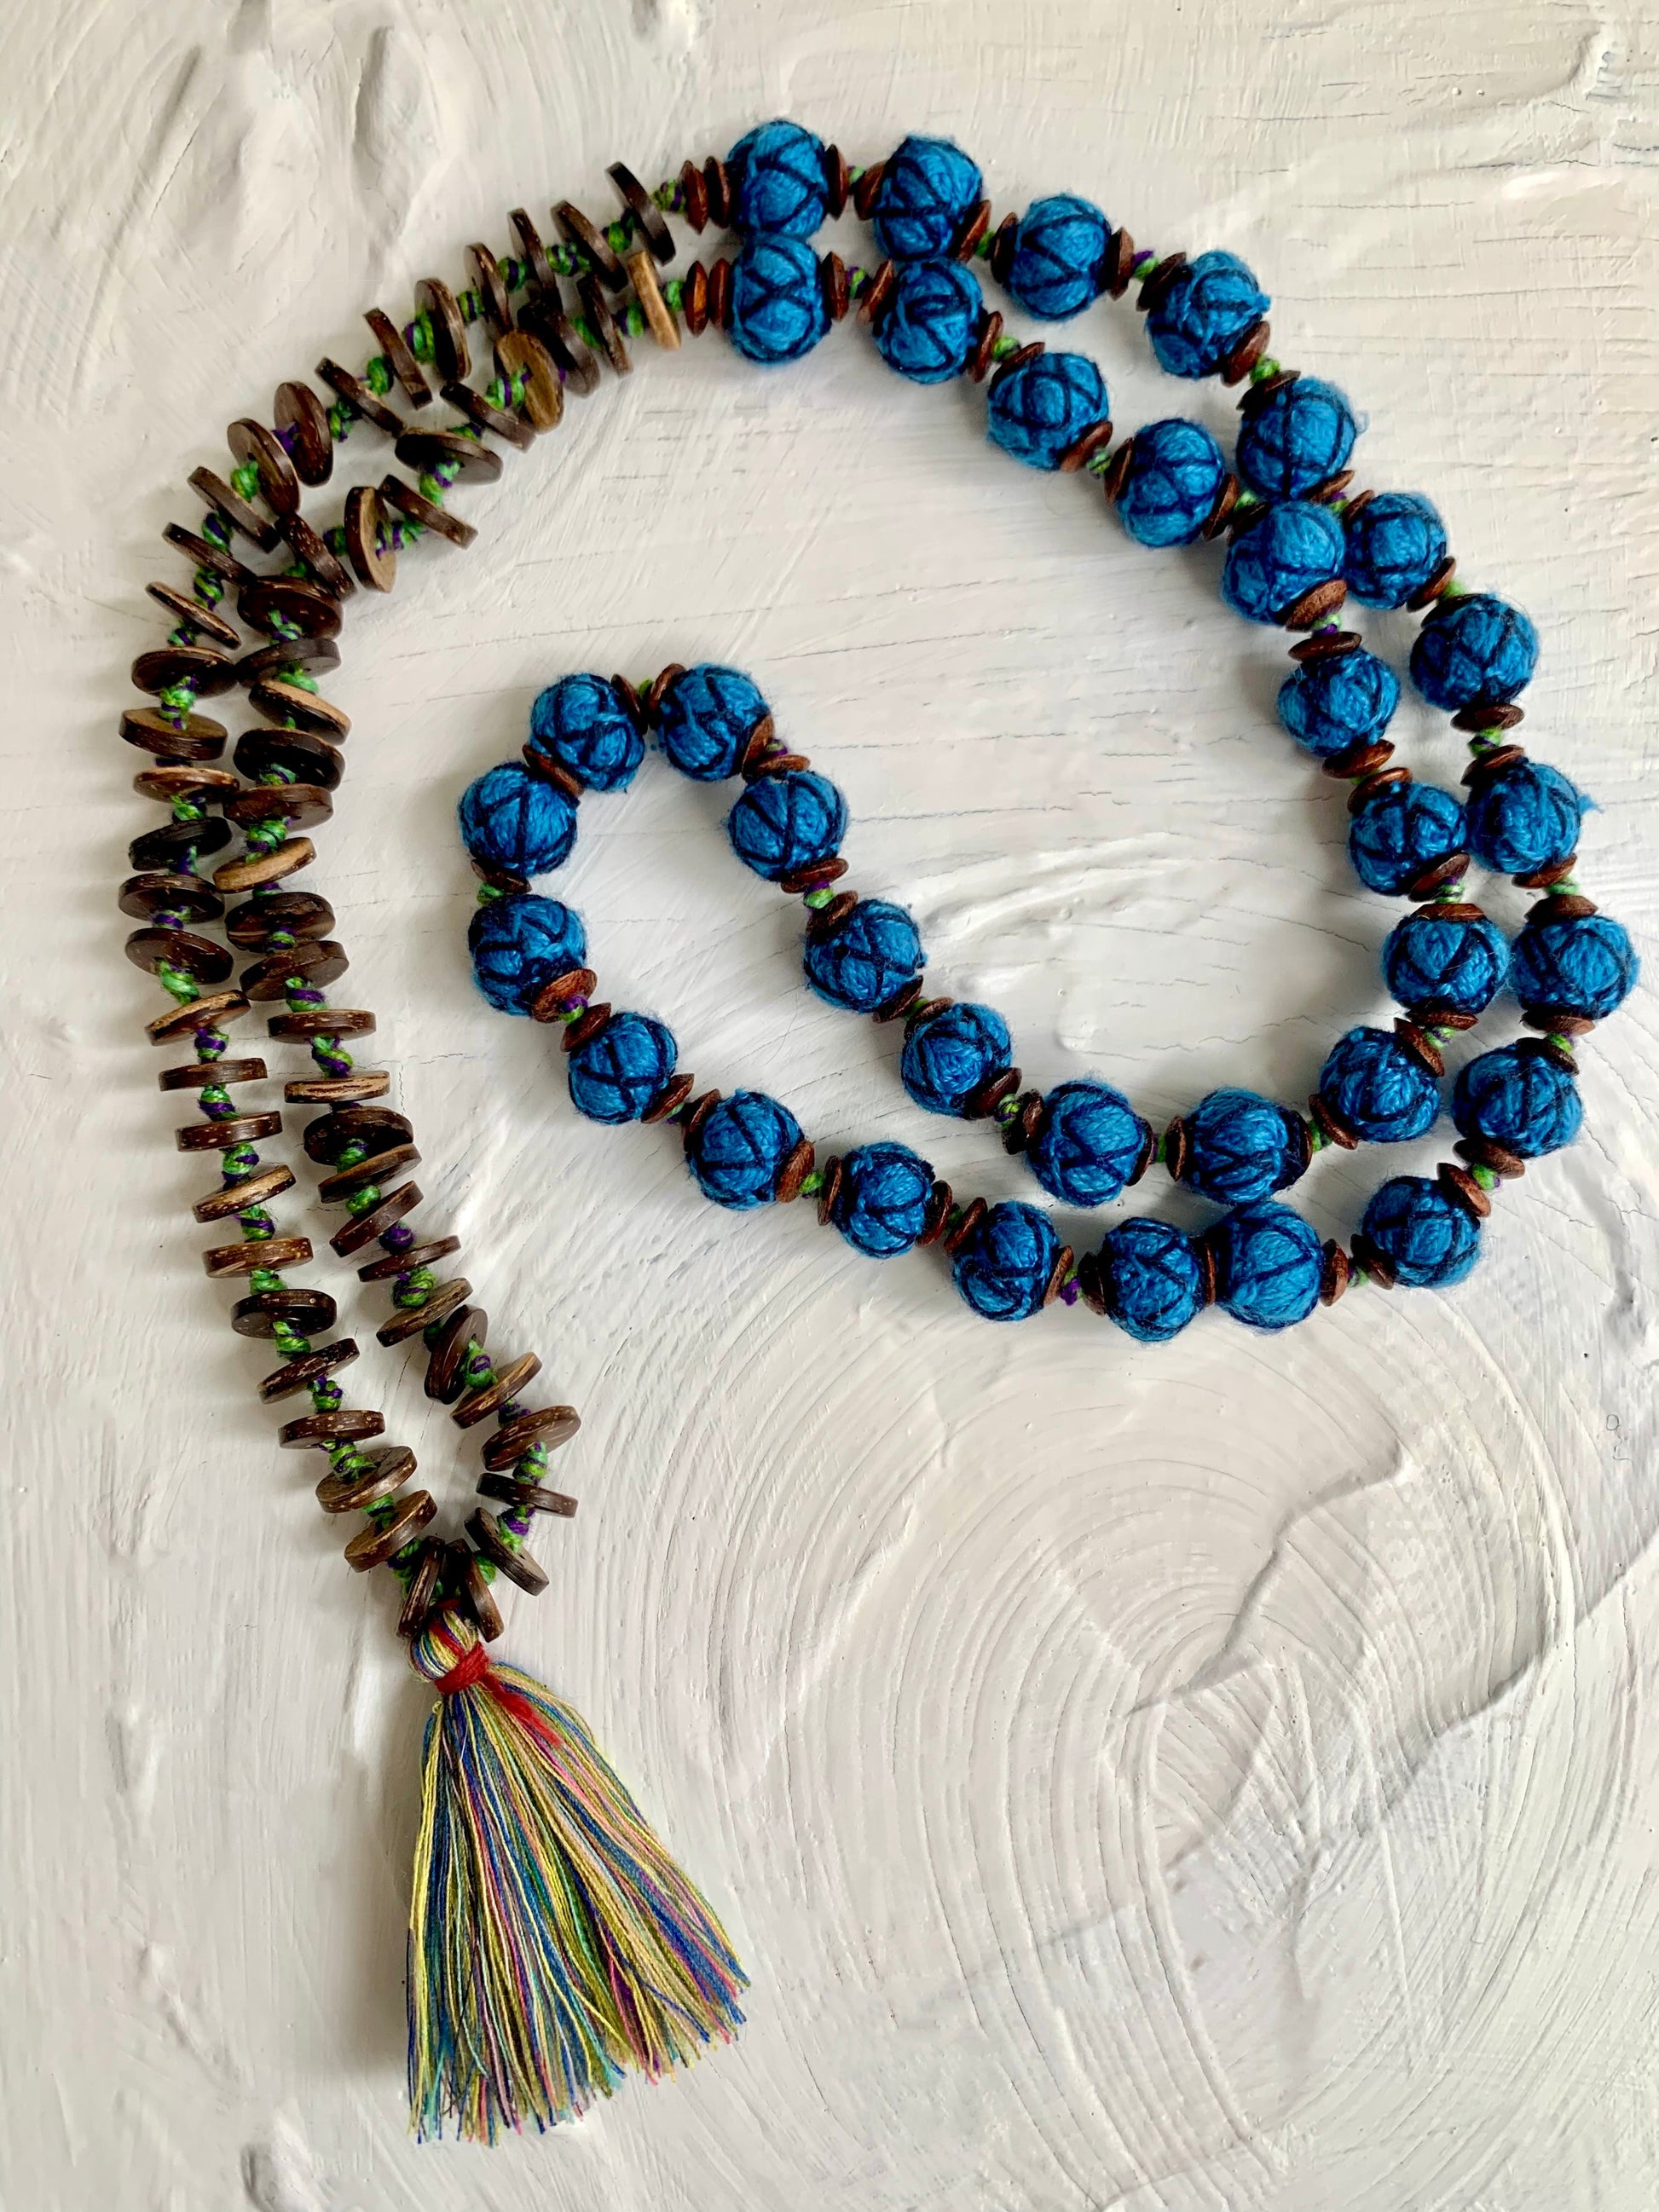 Threaded Artisan-Made Indian Necklaces - Imli.lifestyle